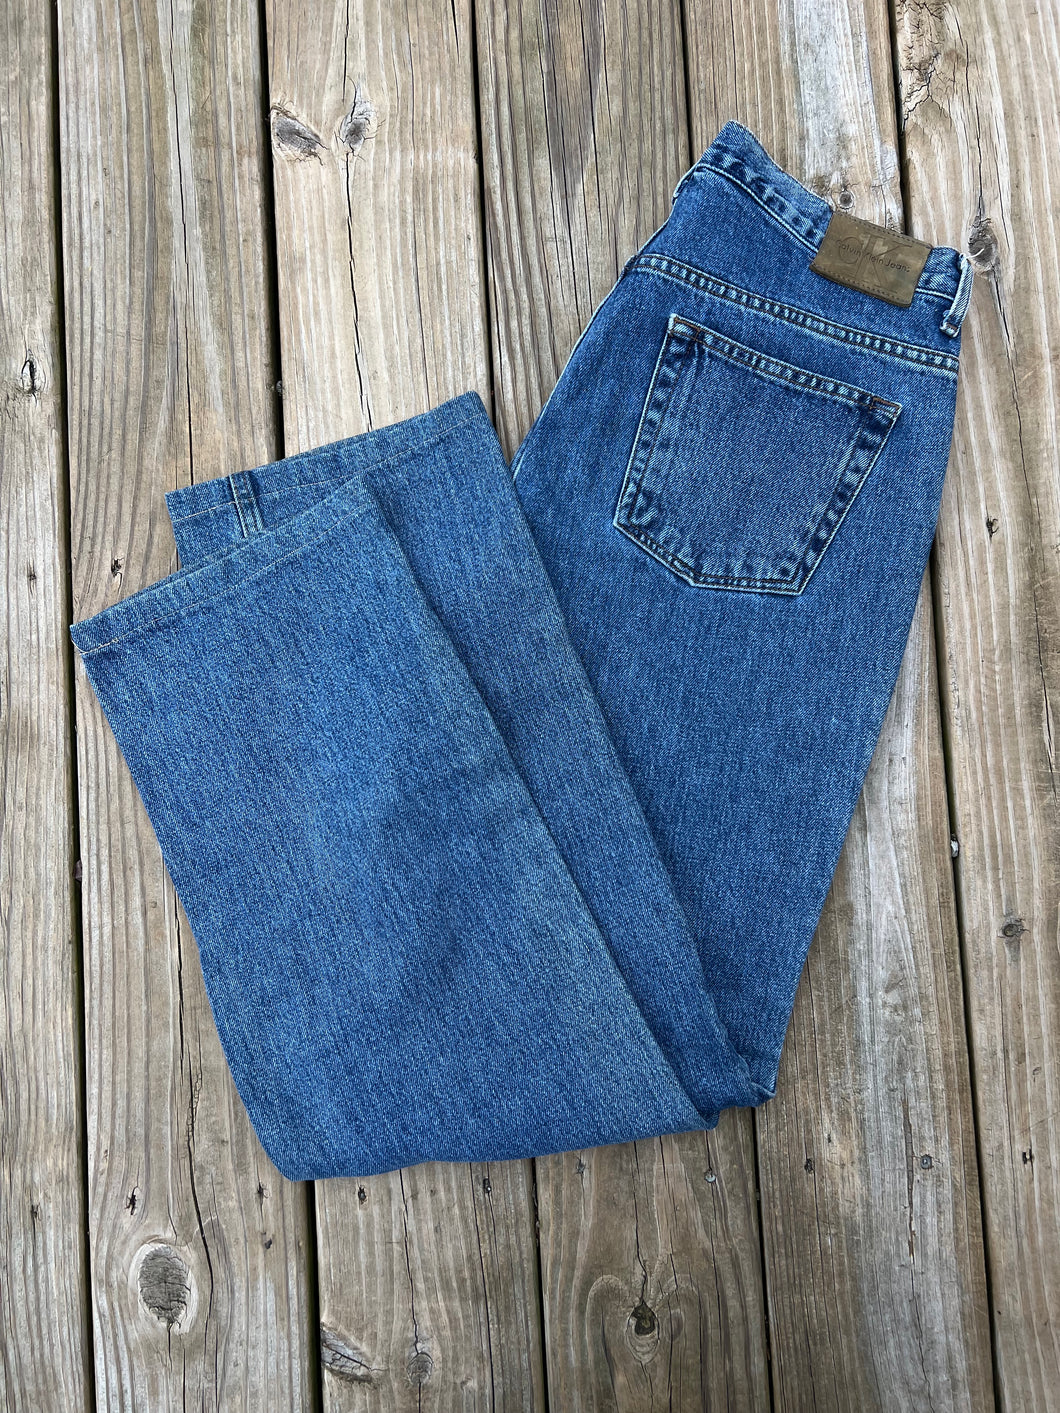 Vintage Calvin Klein Womens Blue Jeans (10, 33x31)